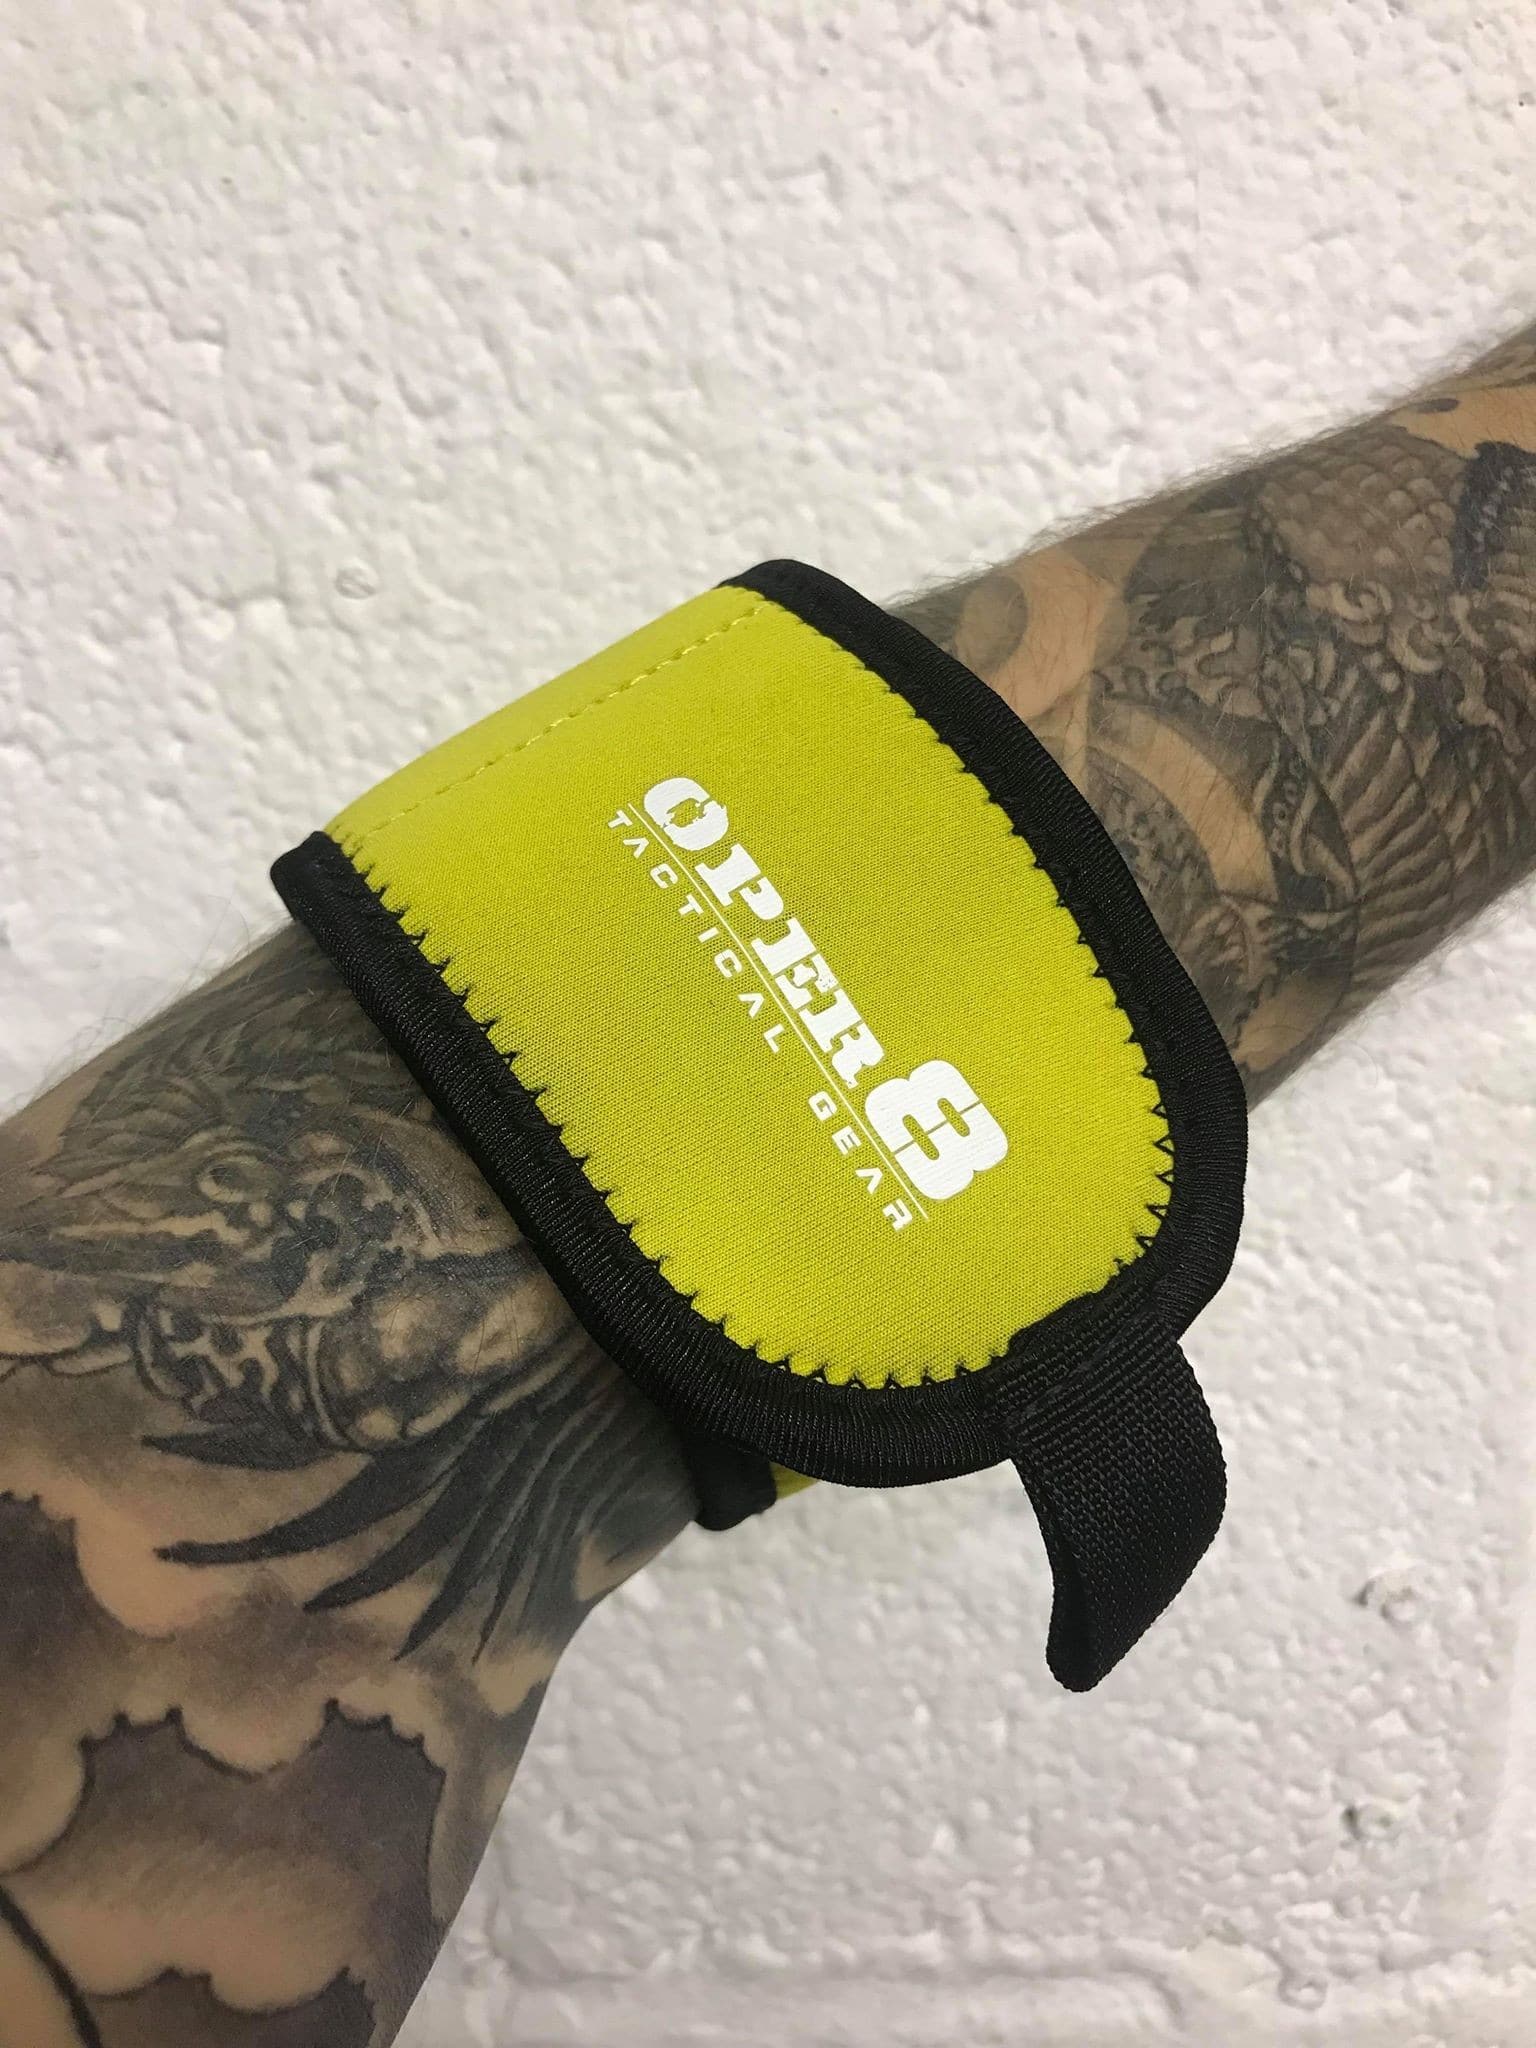 Oper8 Team Arm band (Yellow)